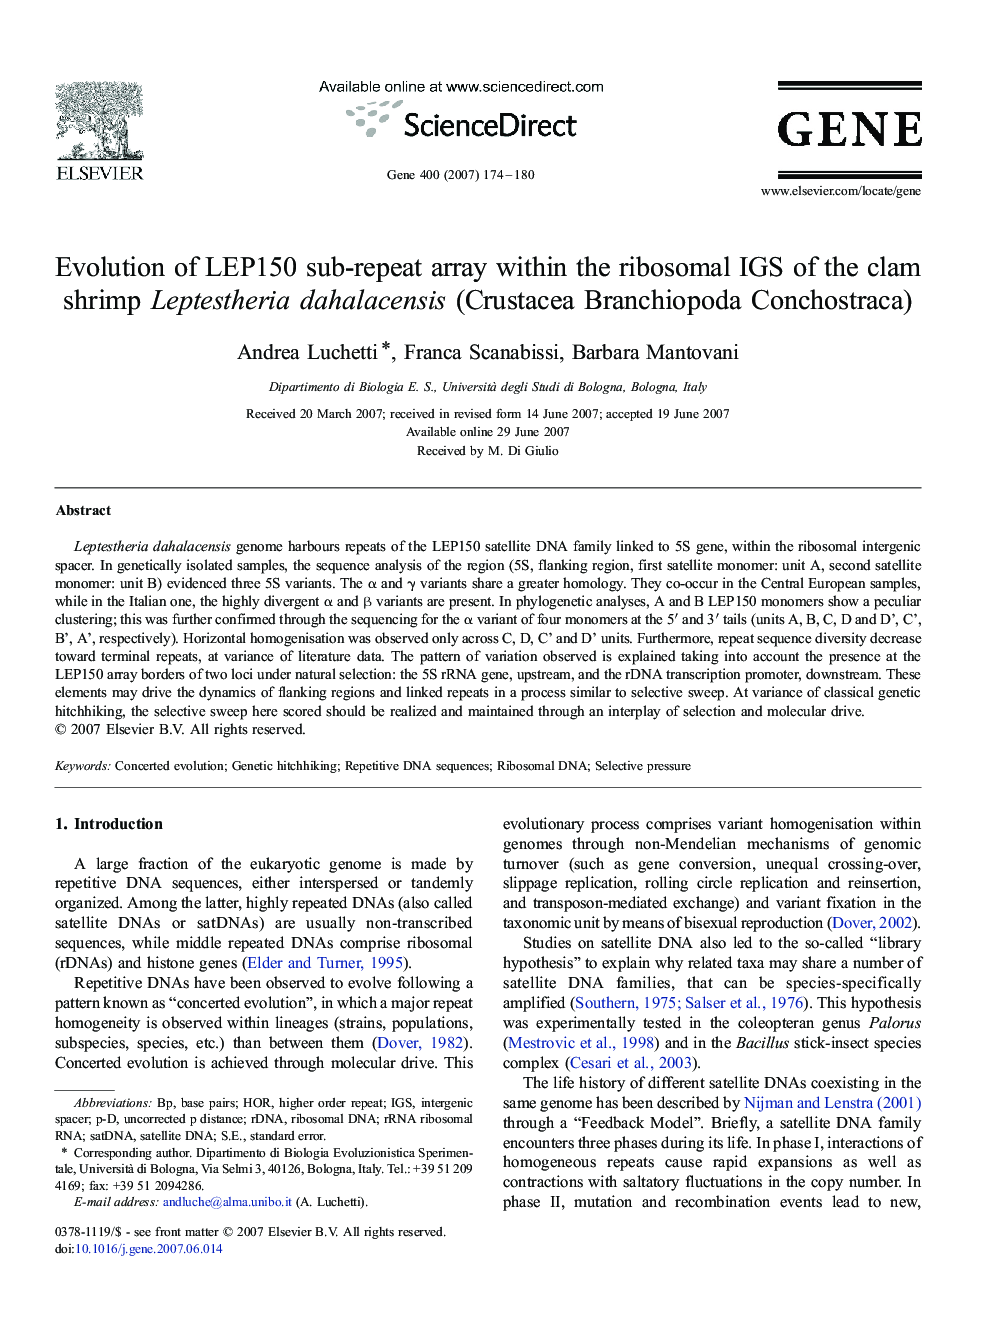 Evolution of LEP150 sub-repeat array within the ribosomal IGS of the clam shrimp Leptestheria dahalacensis (Crustacea Branchiopoda Conchostraca)